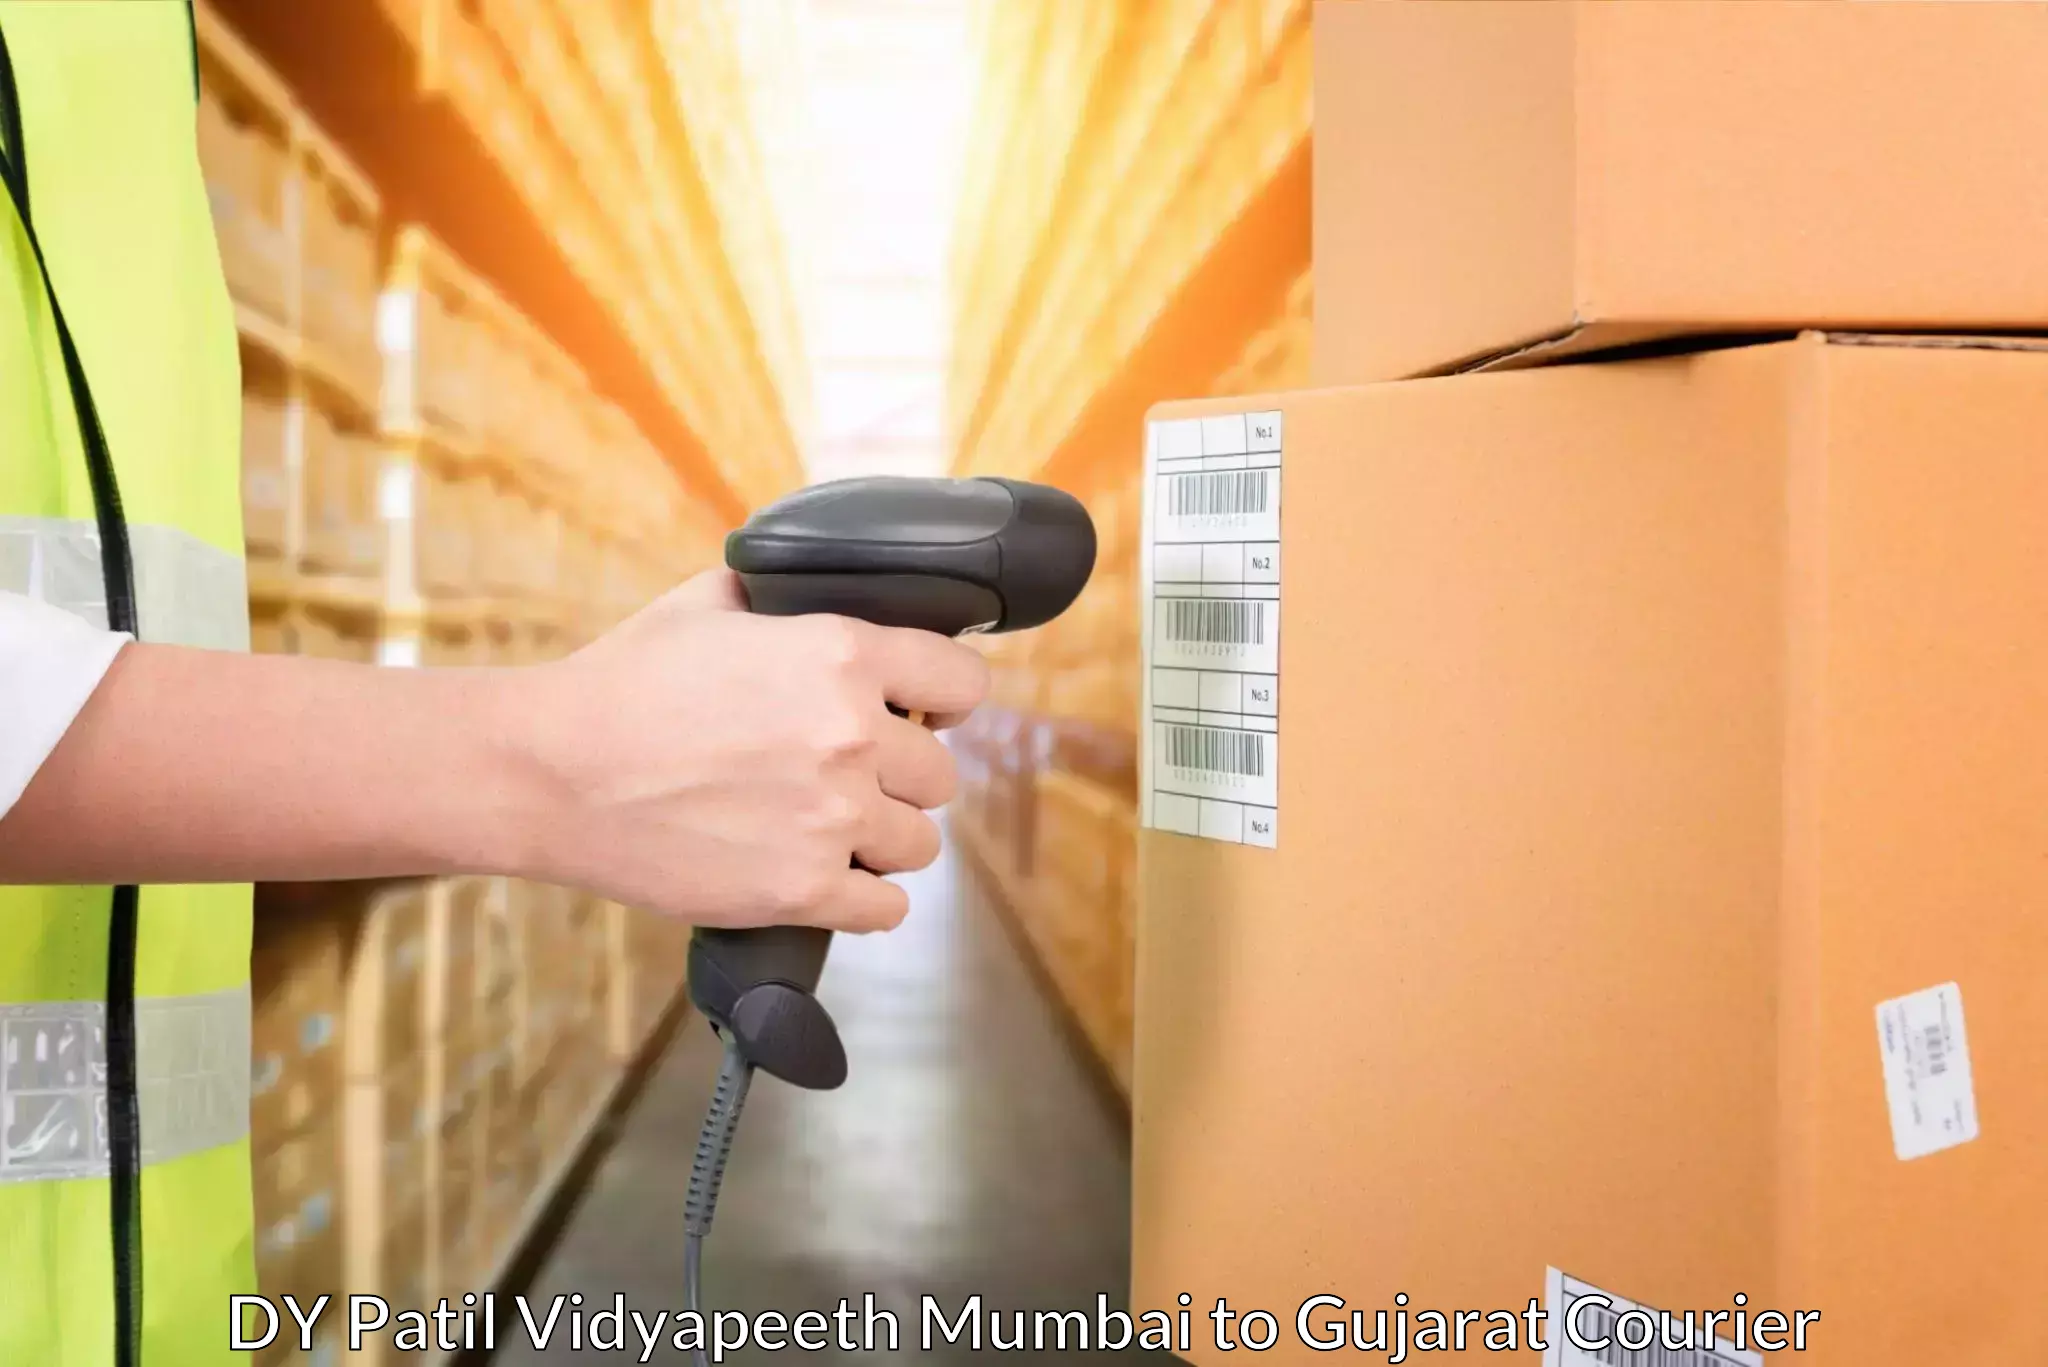 Nationwide parcel services DY Patil Vidyapeeth Mumbai to Gujarat